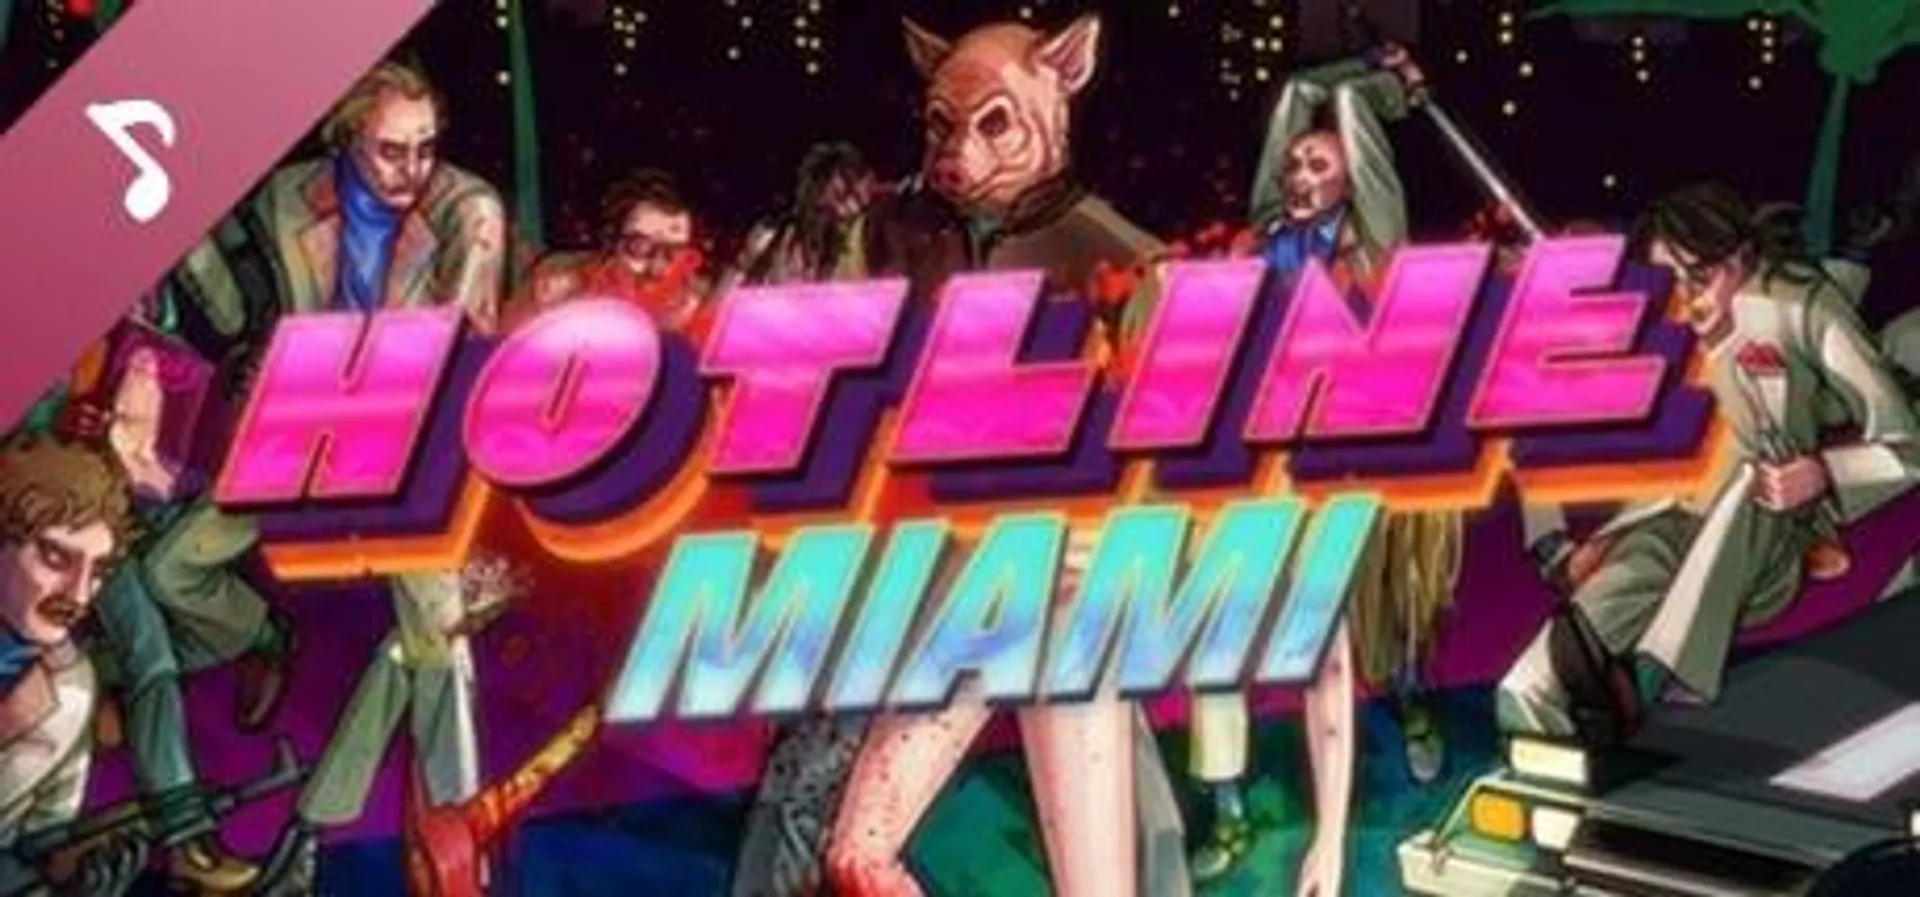 Save 80% on Hotline Miami Soundtrack on Steam